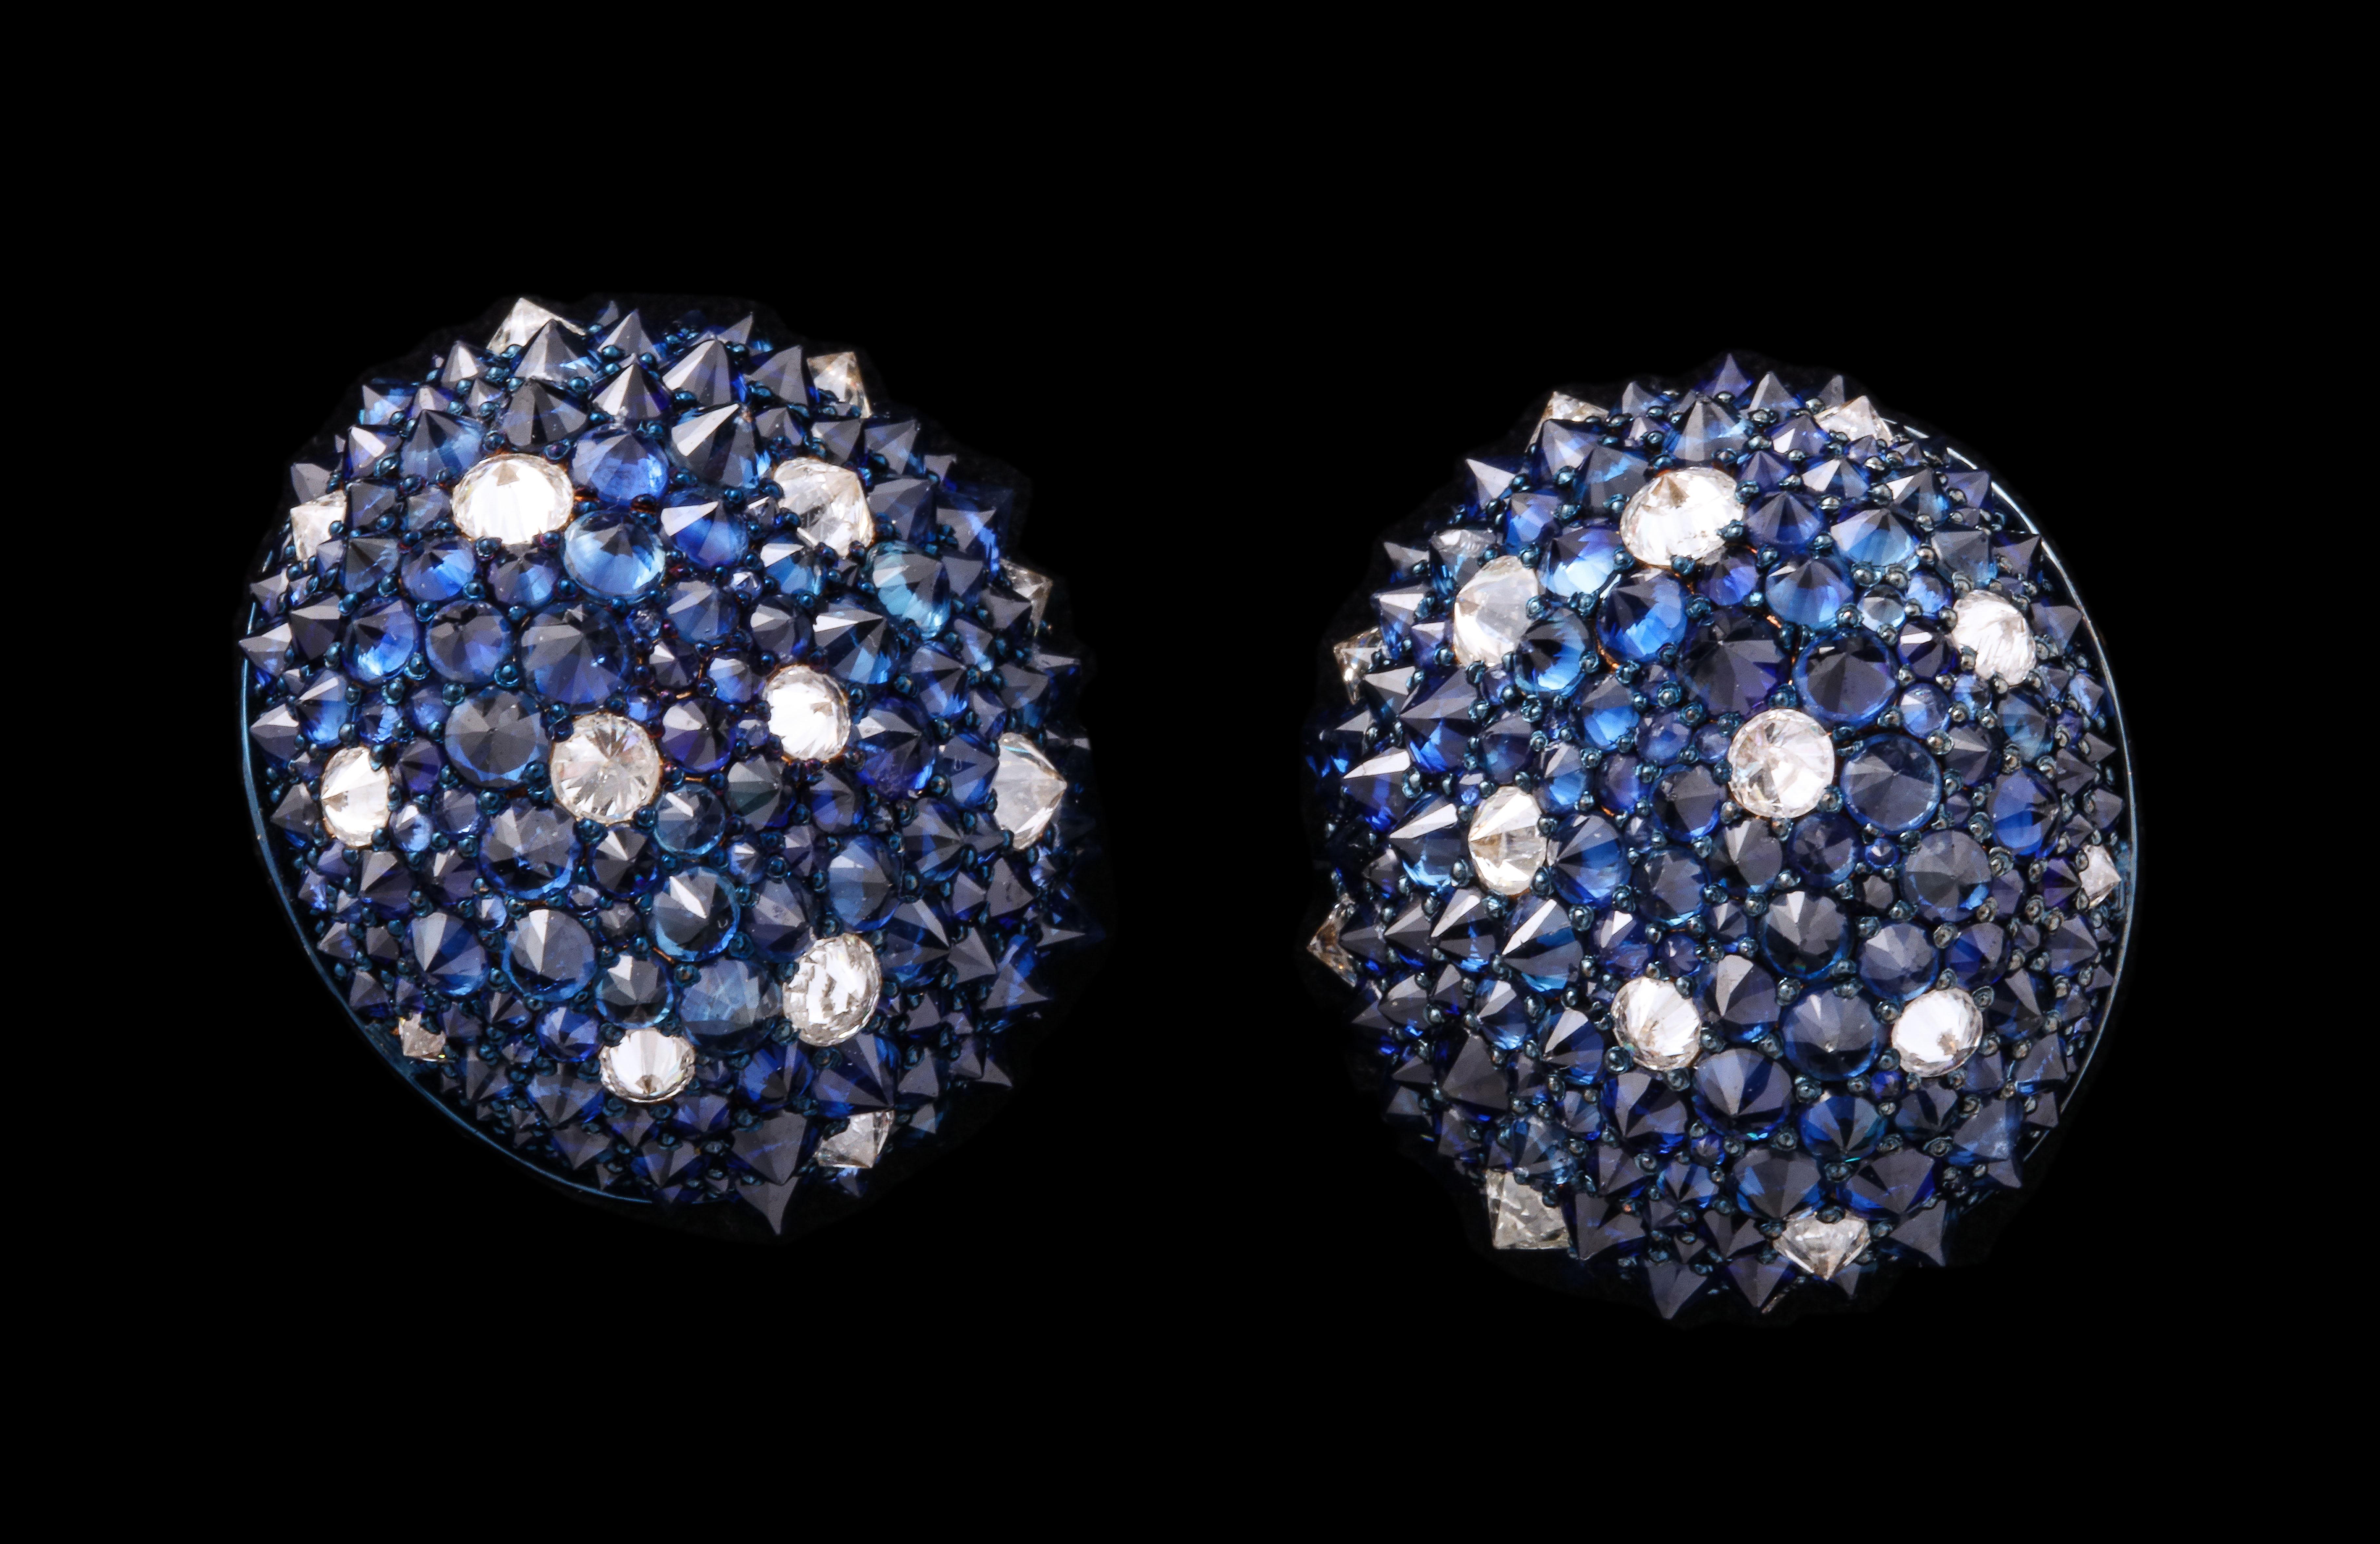 Reverse set sapphire and Diamond Earrings.
10.73 ct diamonds
21.31 ct sapphires

18 karat gold